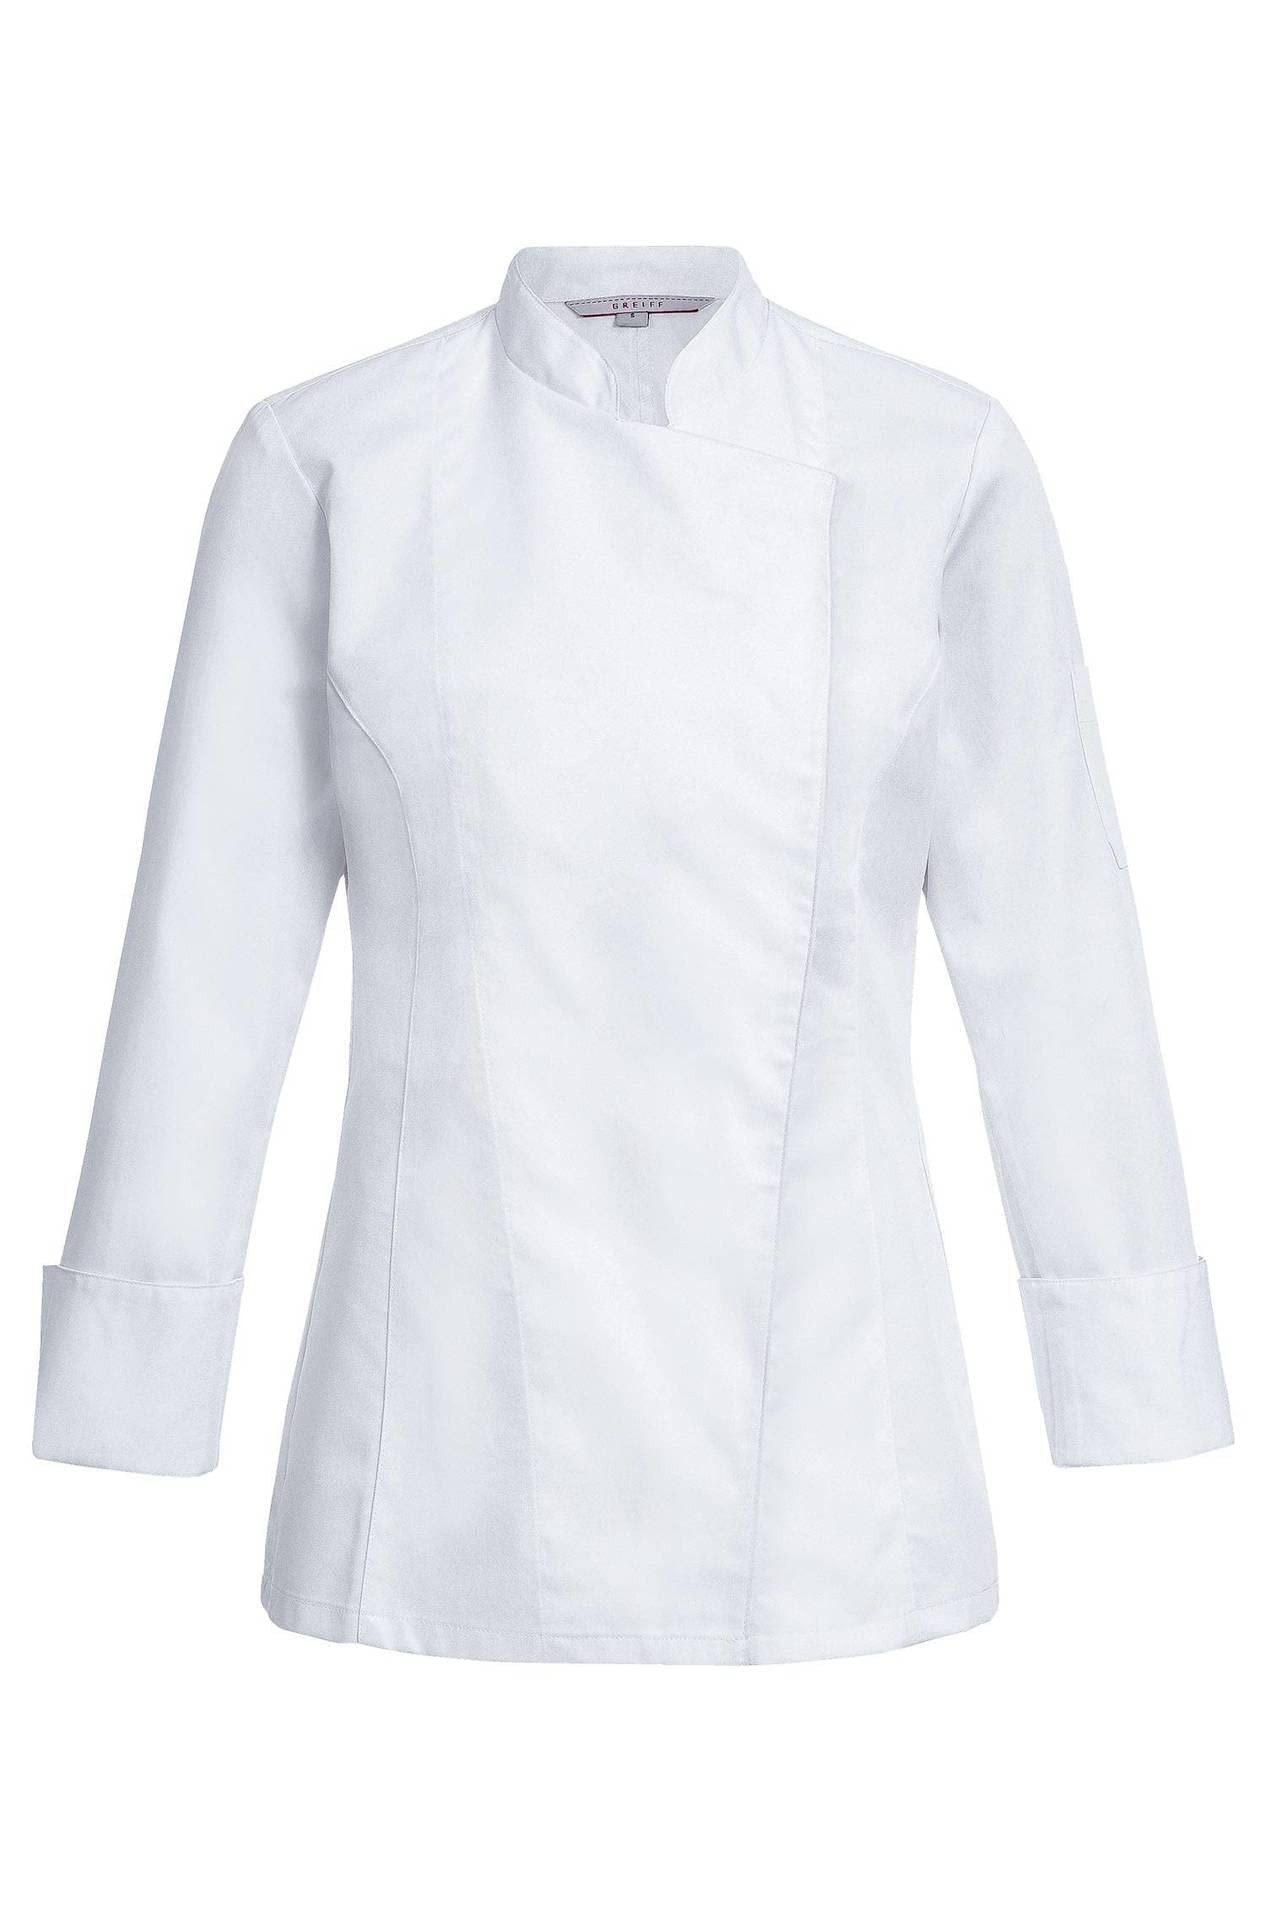 Greiff Gastro Moda Damen Cuisine Basic Kochjacke Regular Fit Weiß Modell 5405 Größe L